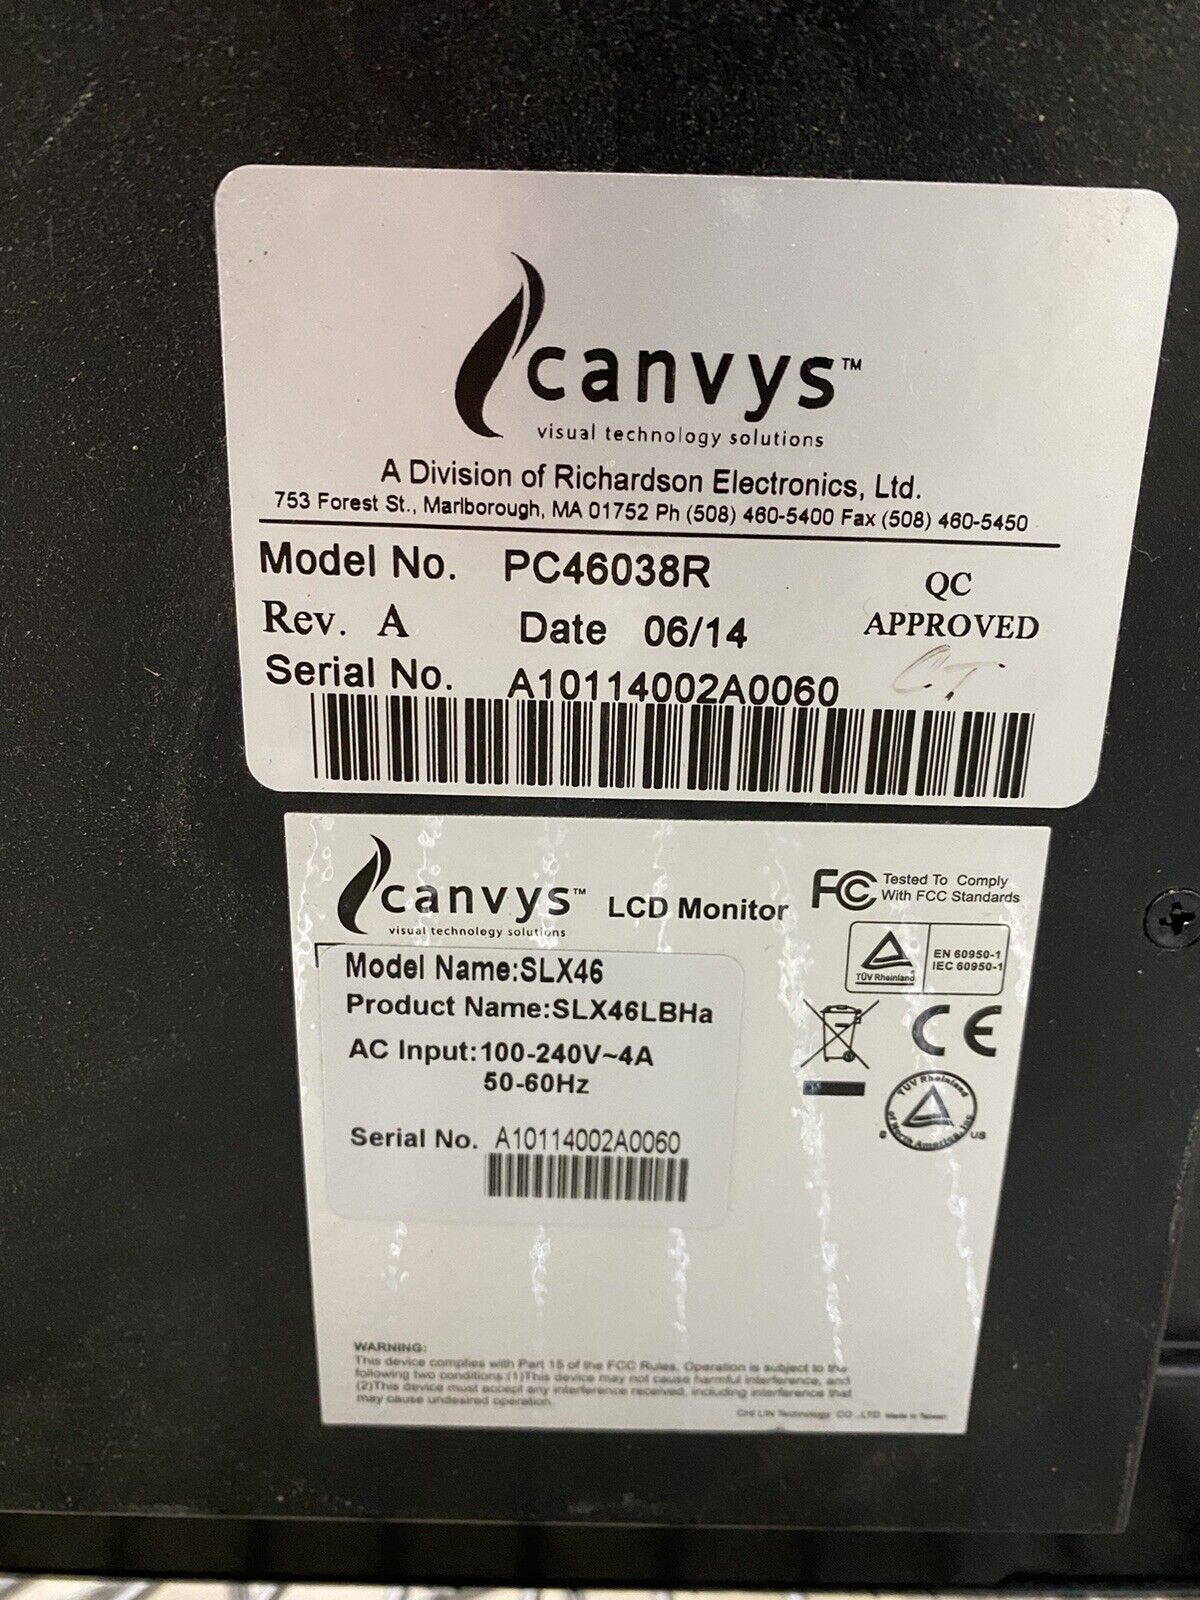 Canvys PC46038R 46" LCD Monitor SLX46LBHa VGA/RS232C/DVI-D/DisplayPort/HDMI Blac